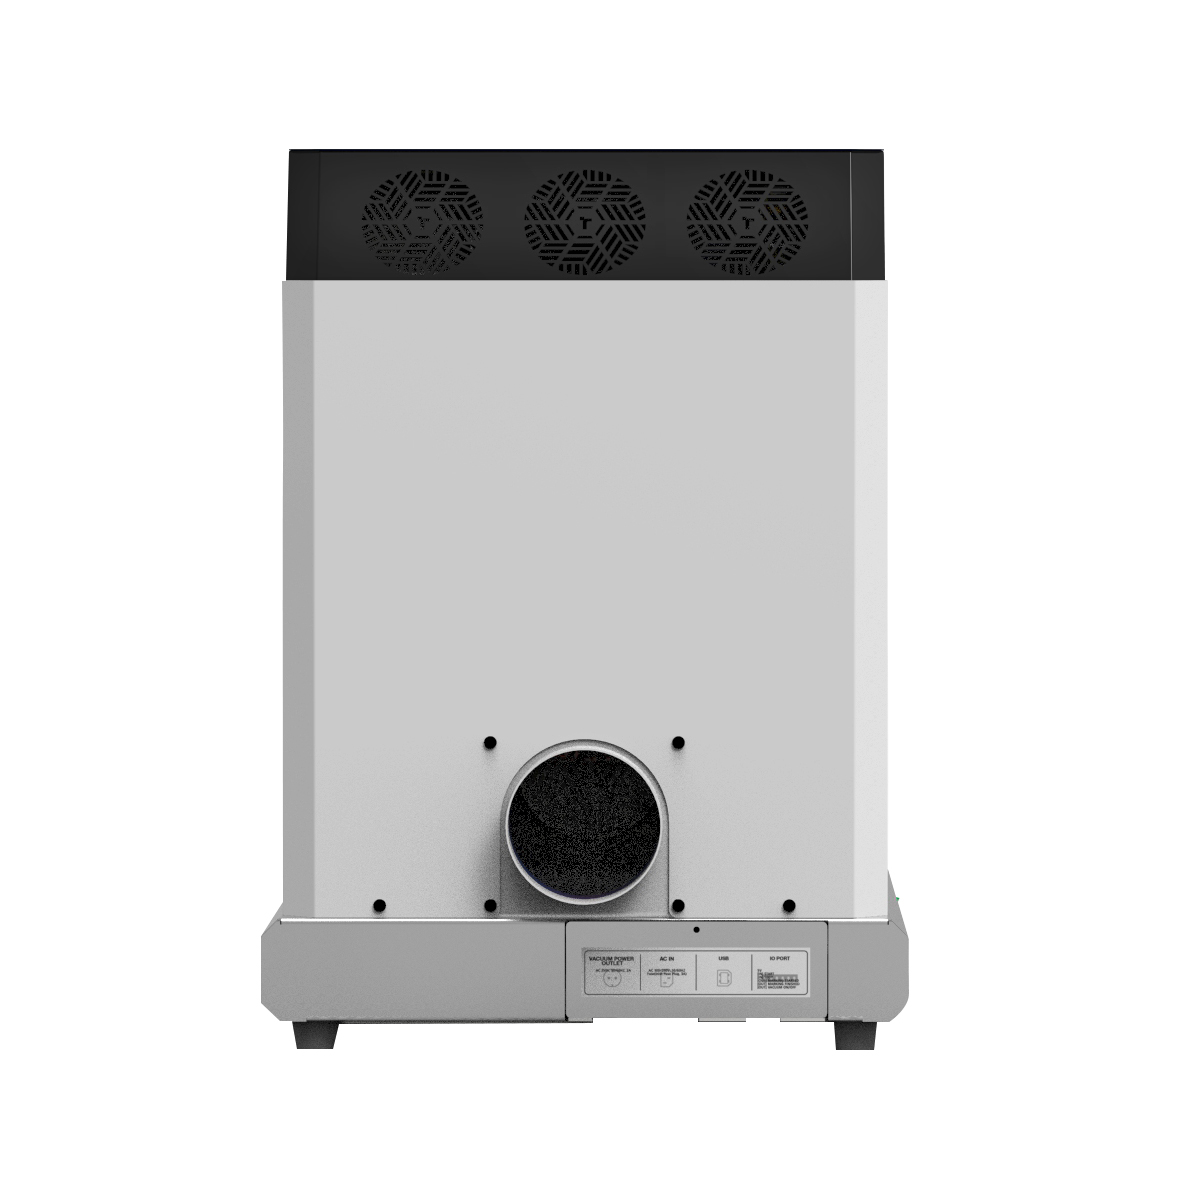 Lasermarkering machine Magic-L3 30W met geïntegreerde camera en autofocus